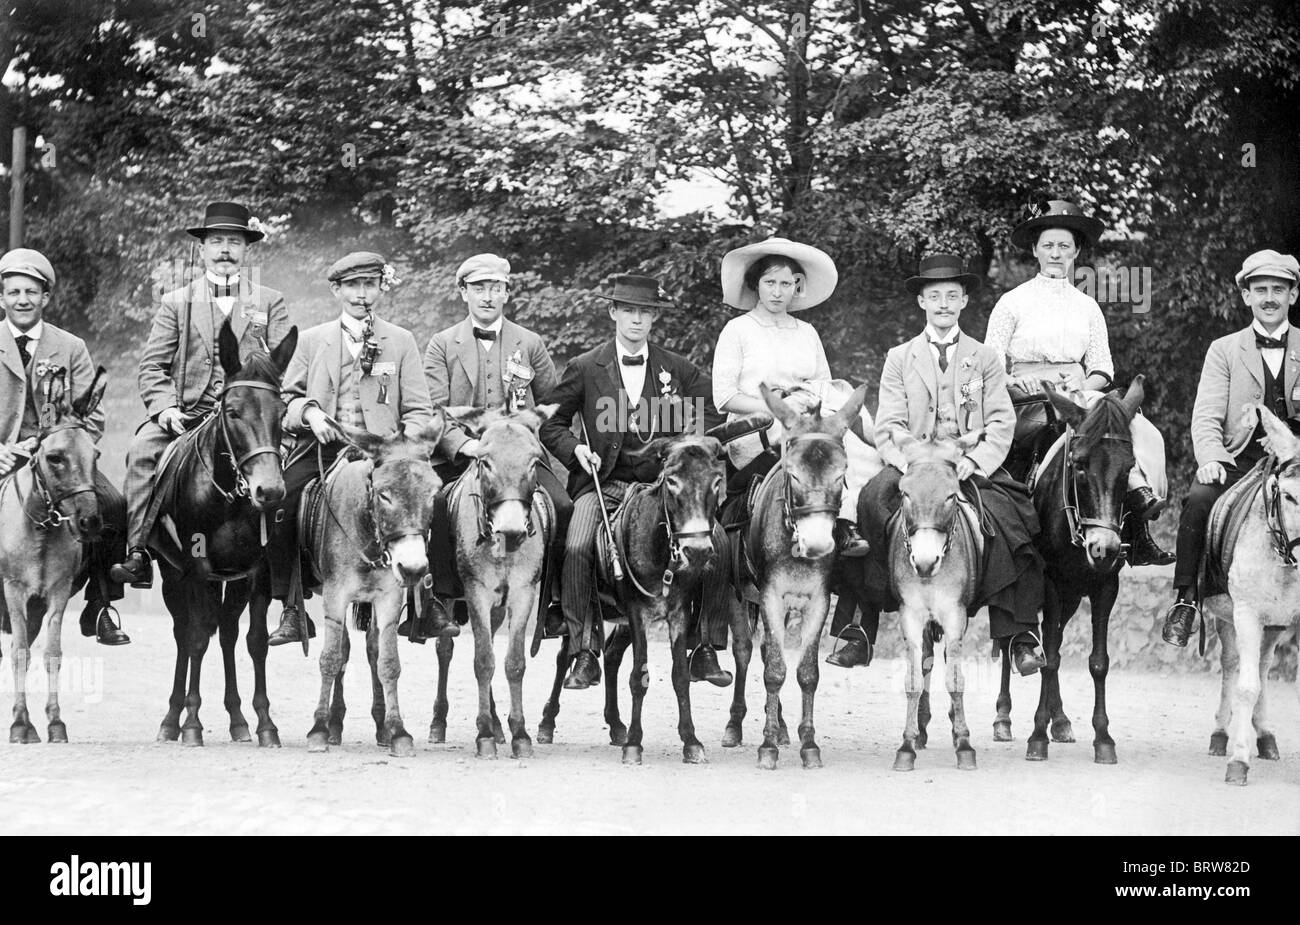 Outing on donkeys, historic photograph, around 1911 Stock Photo